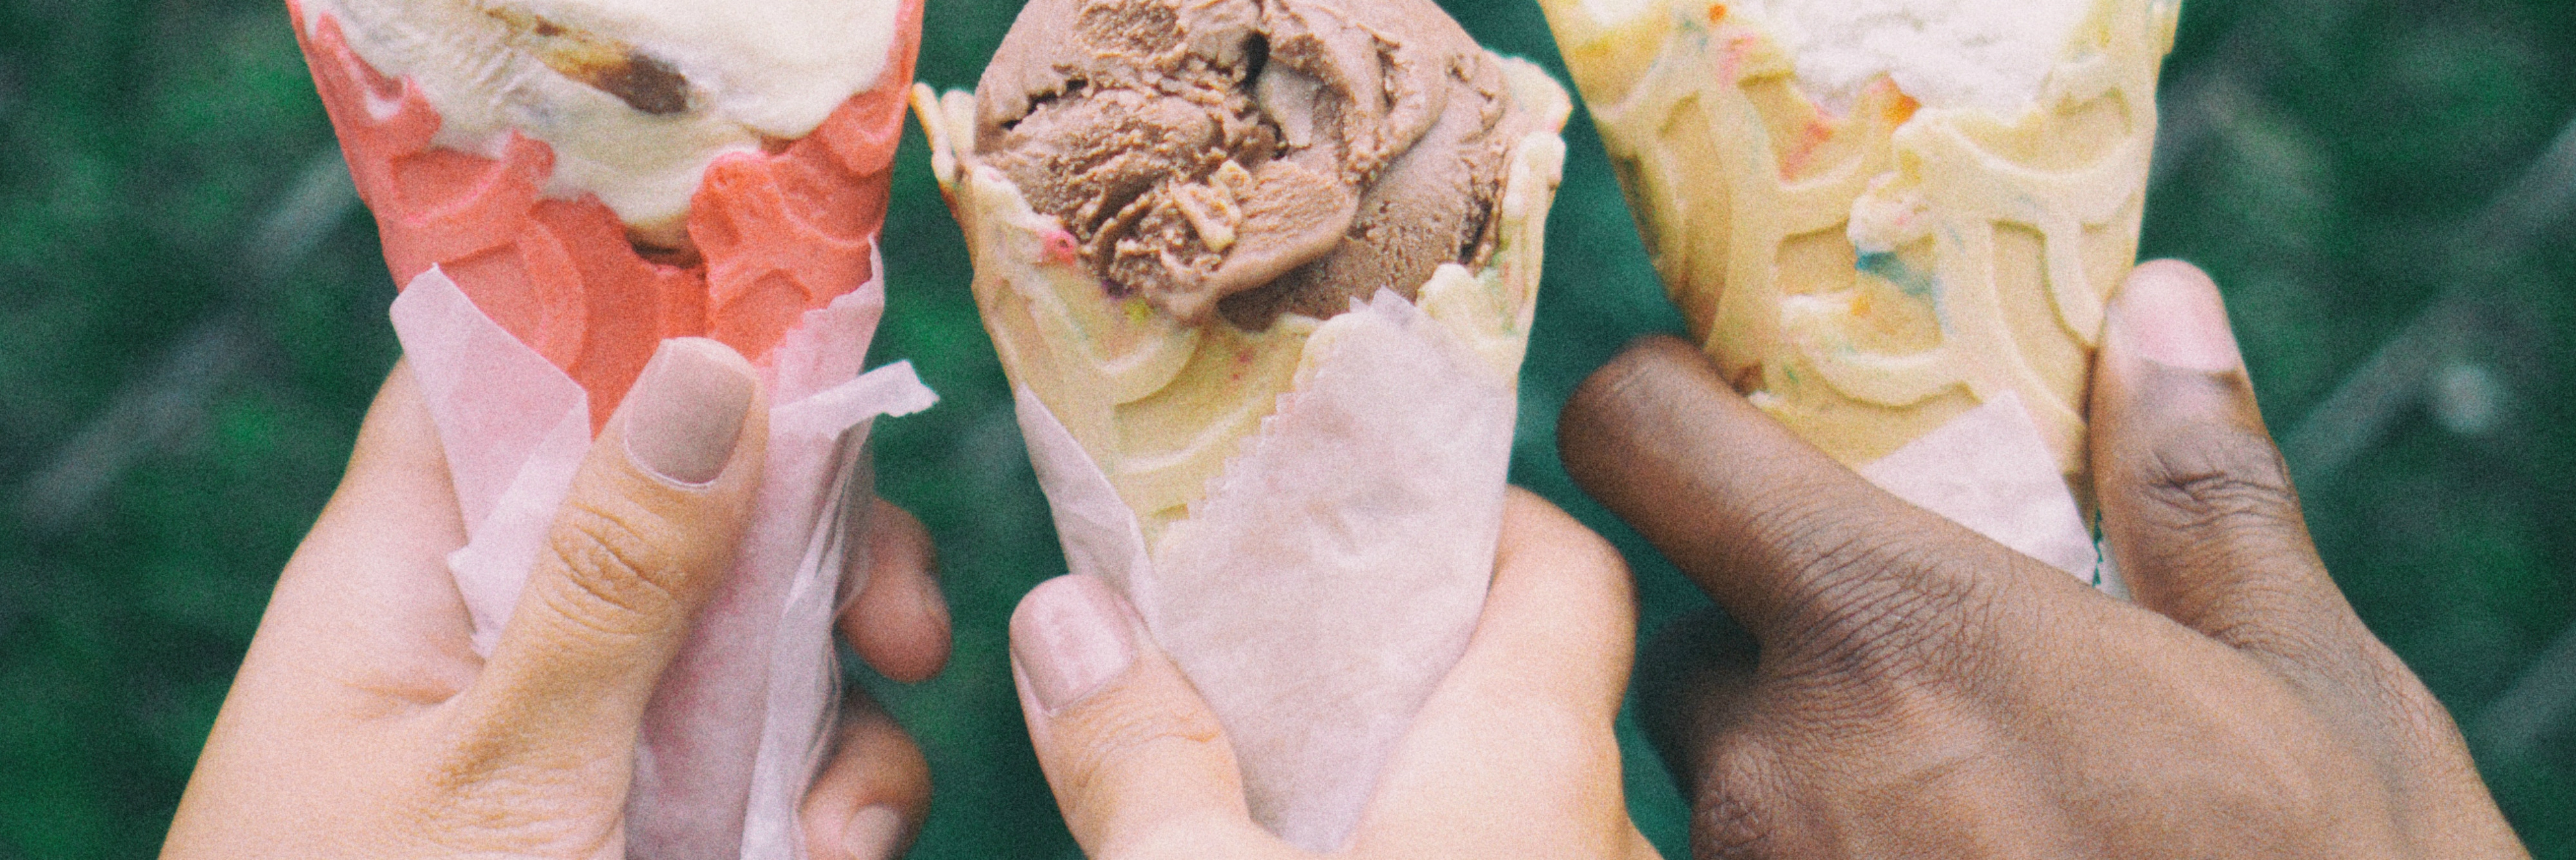 three friends sharing ice cream